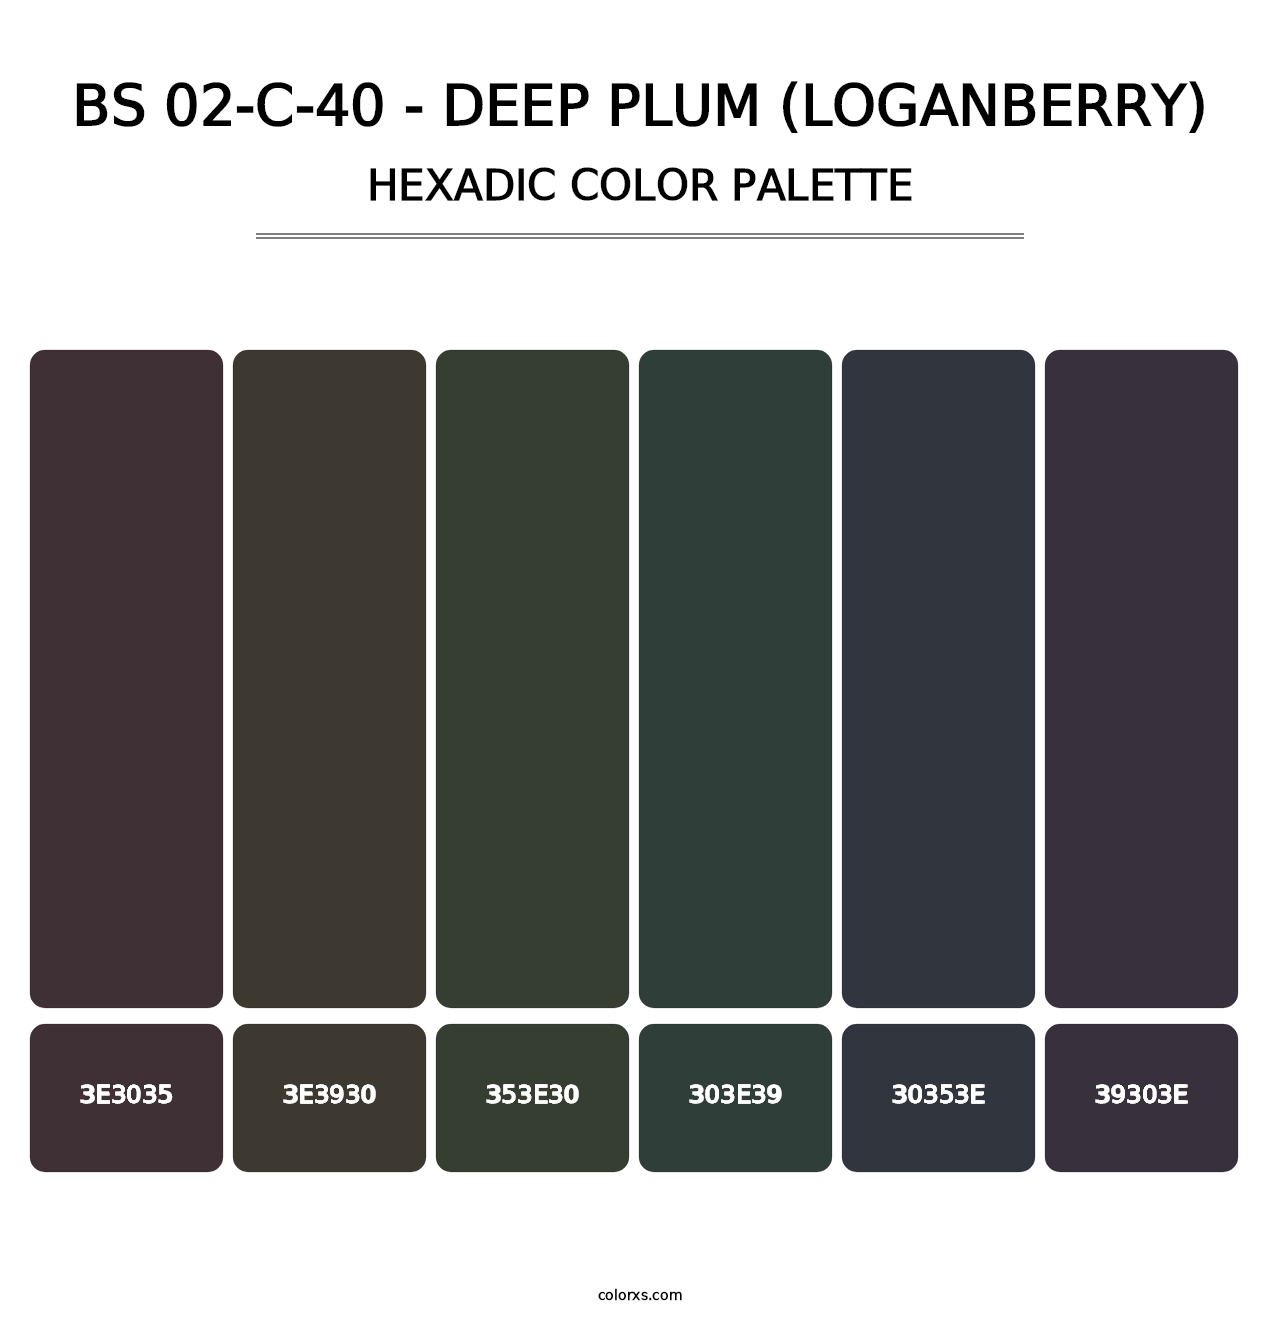 BS 02-C-40 - Deep Plum (Loganberry) - Hexadic Color Palette